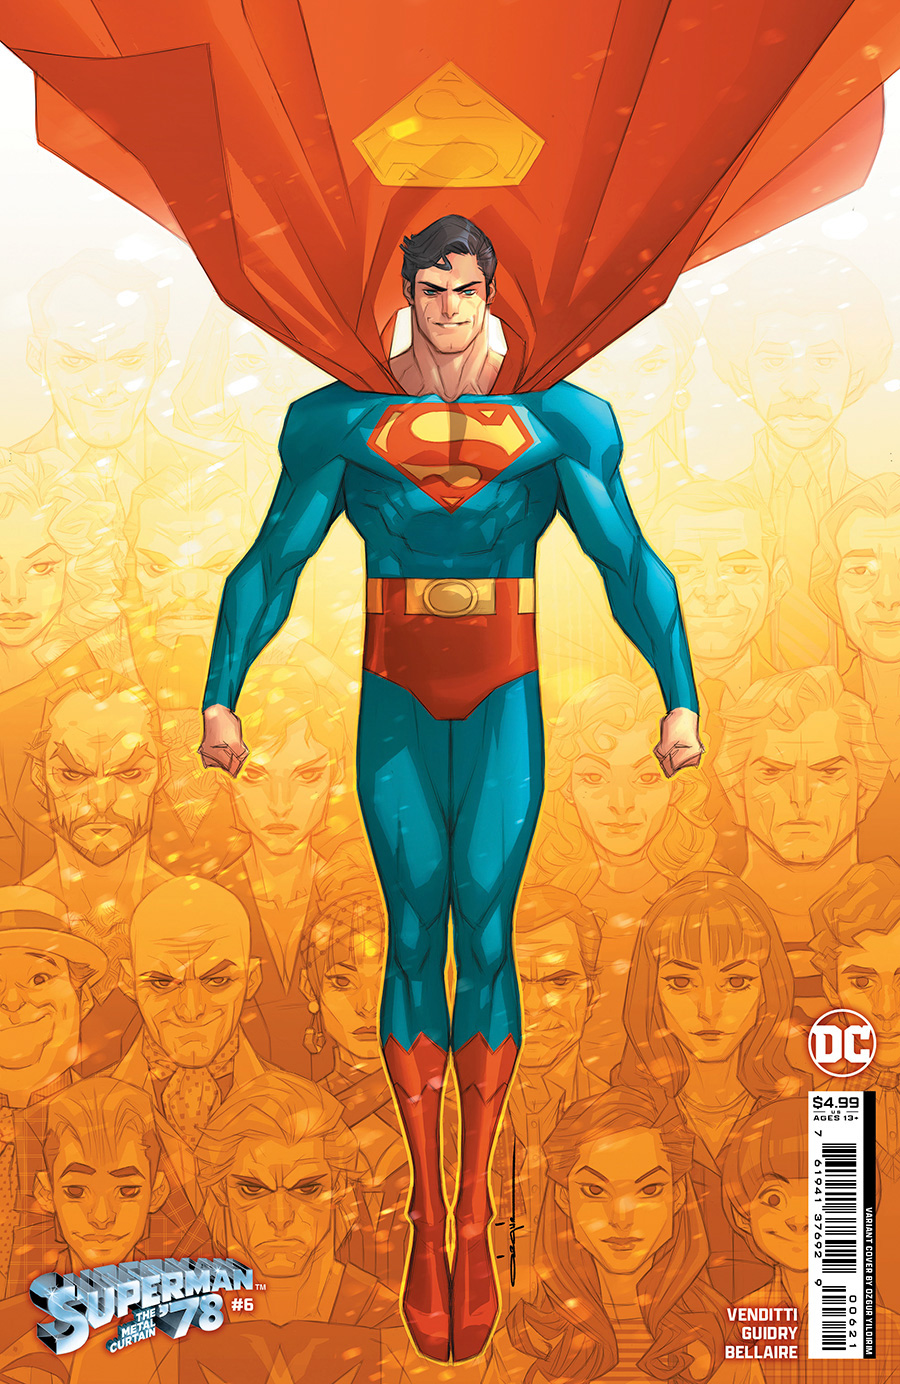 Superman 78 The Metal Curtain #6 Cover B Variant Ozgur Yildrim Card Stock Cover